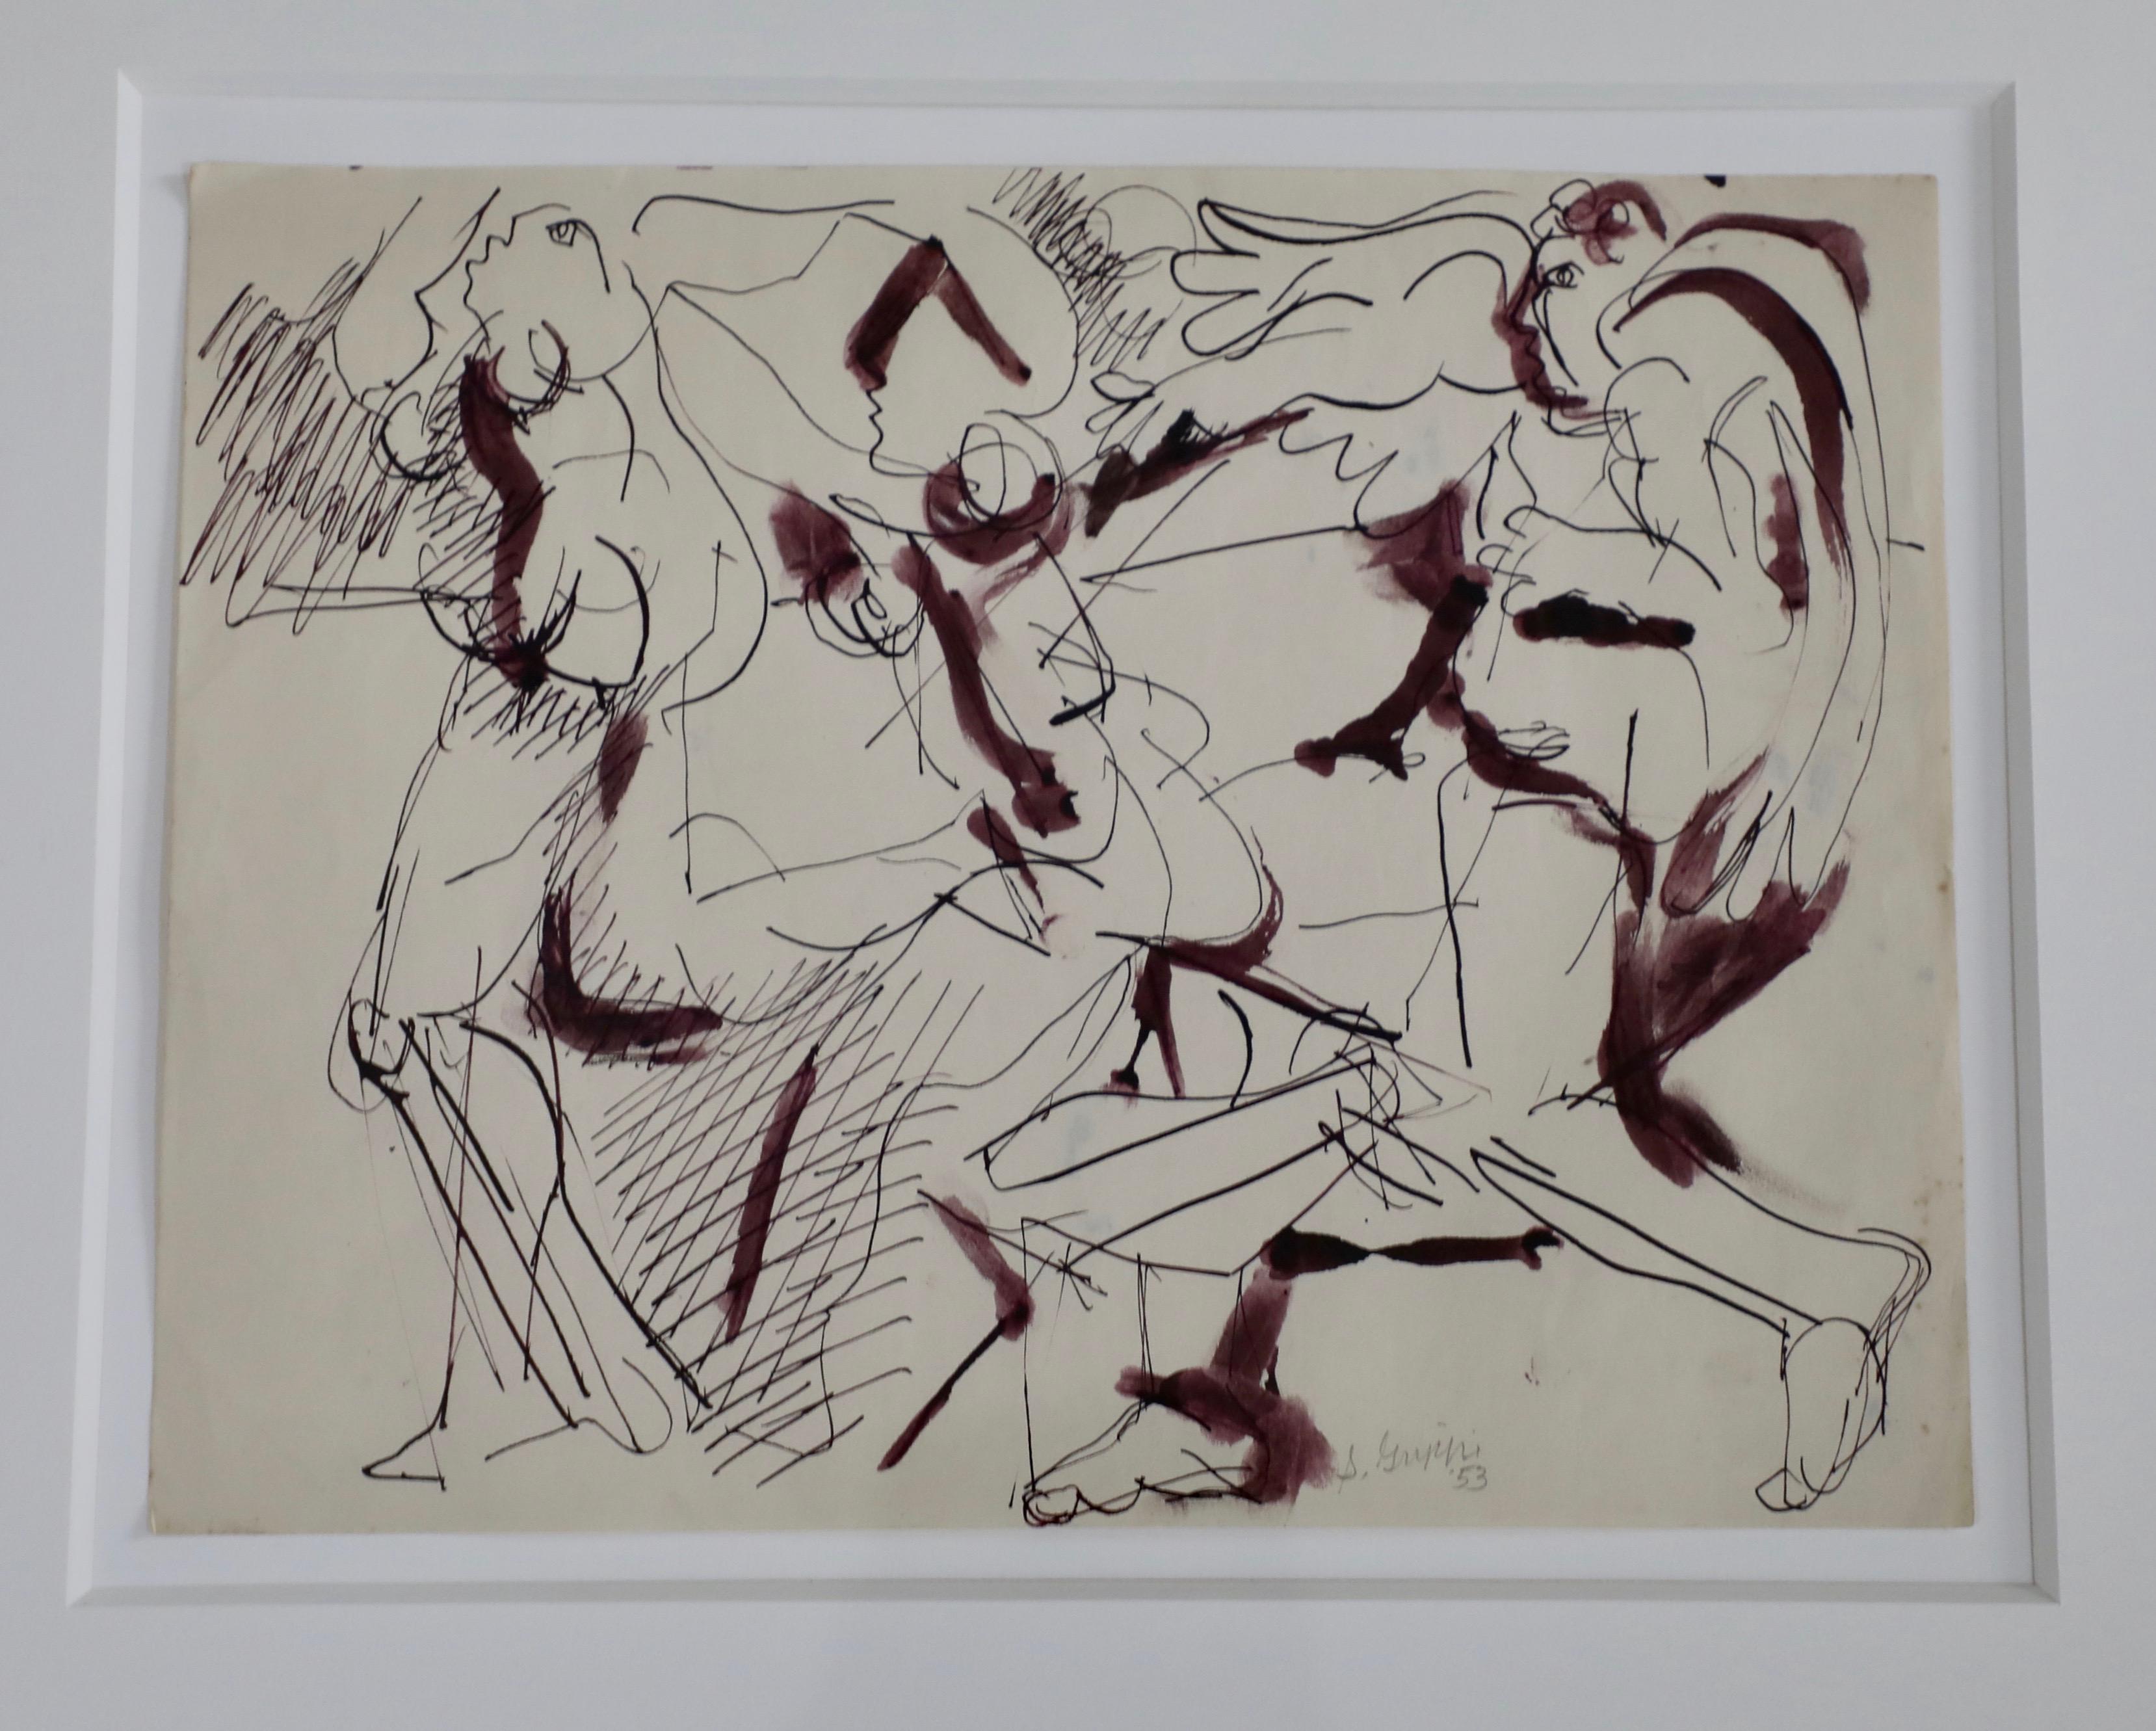 Mythological themed Figures on Paper - Art by Salvatore Grippi